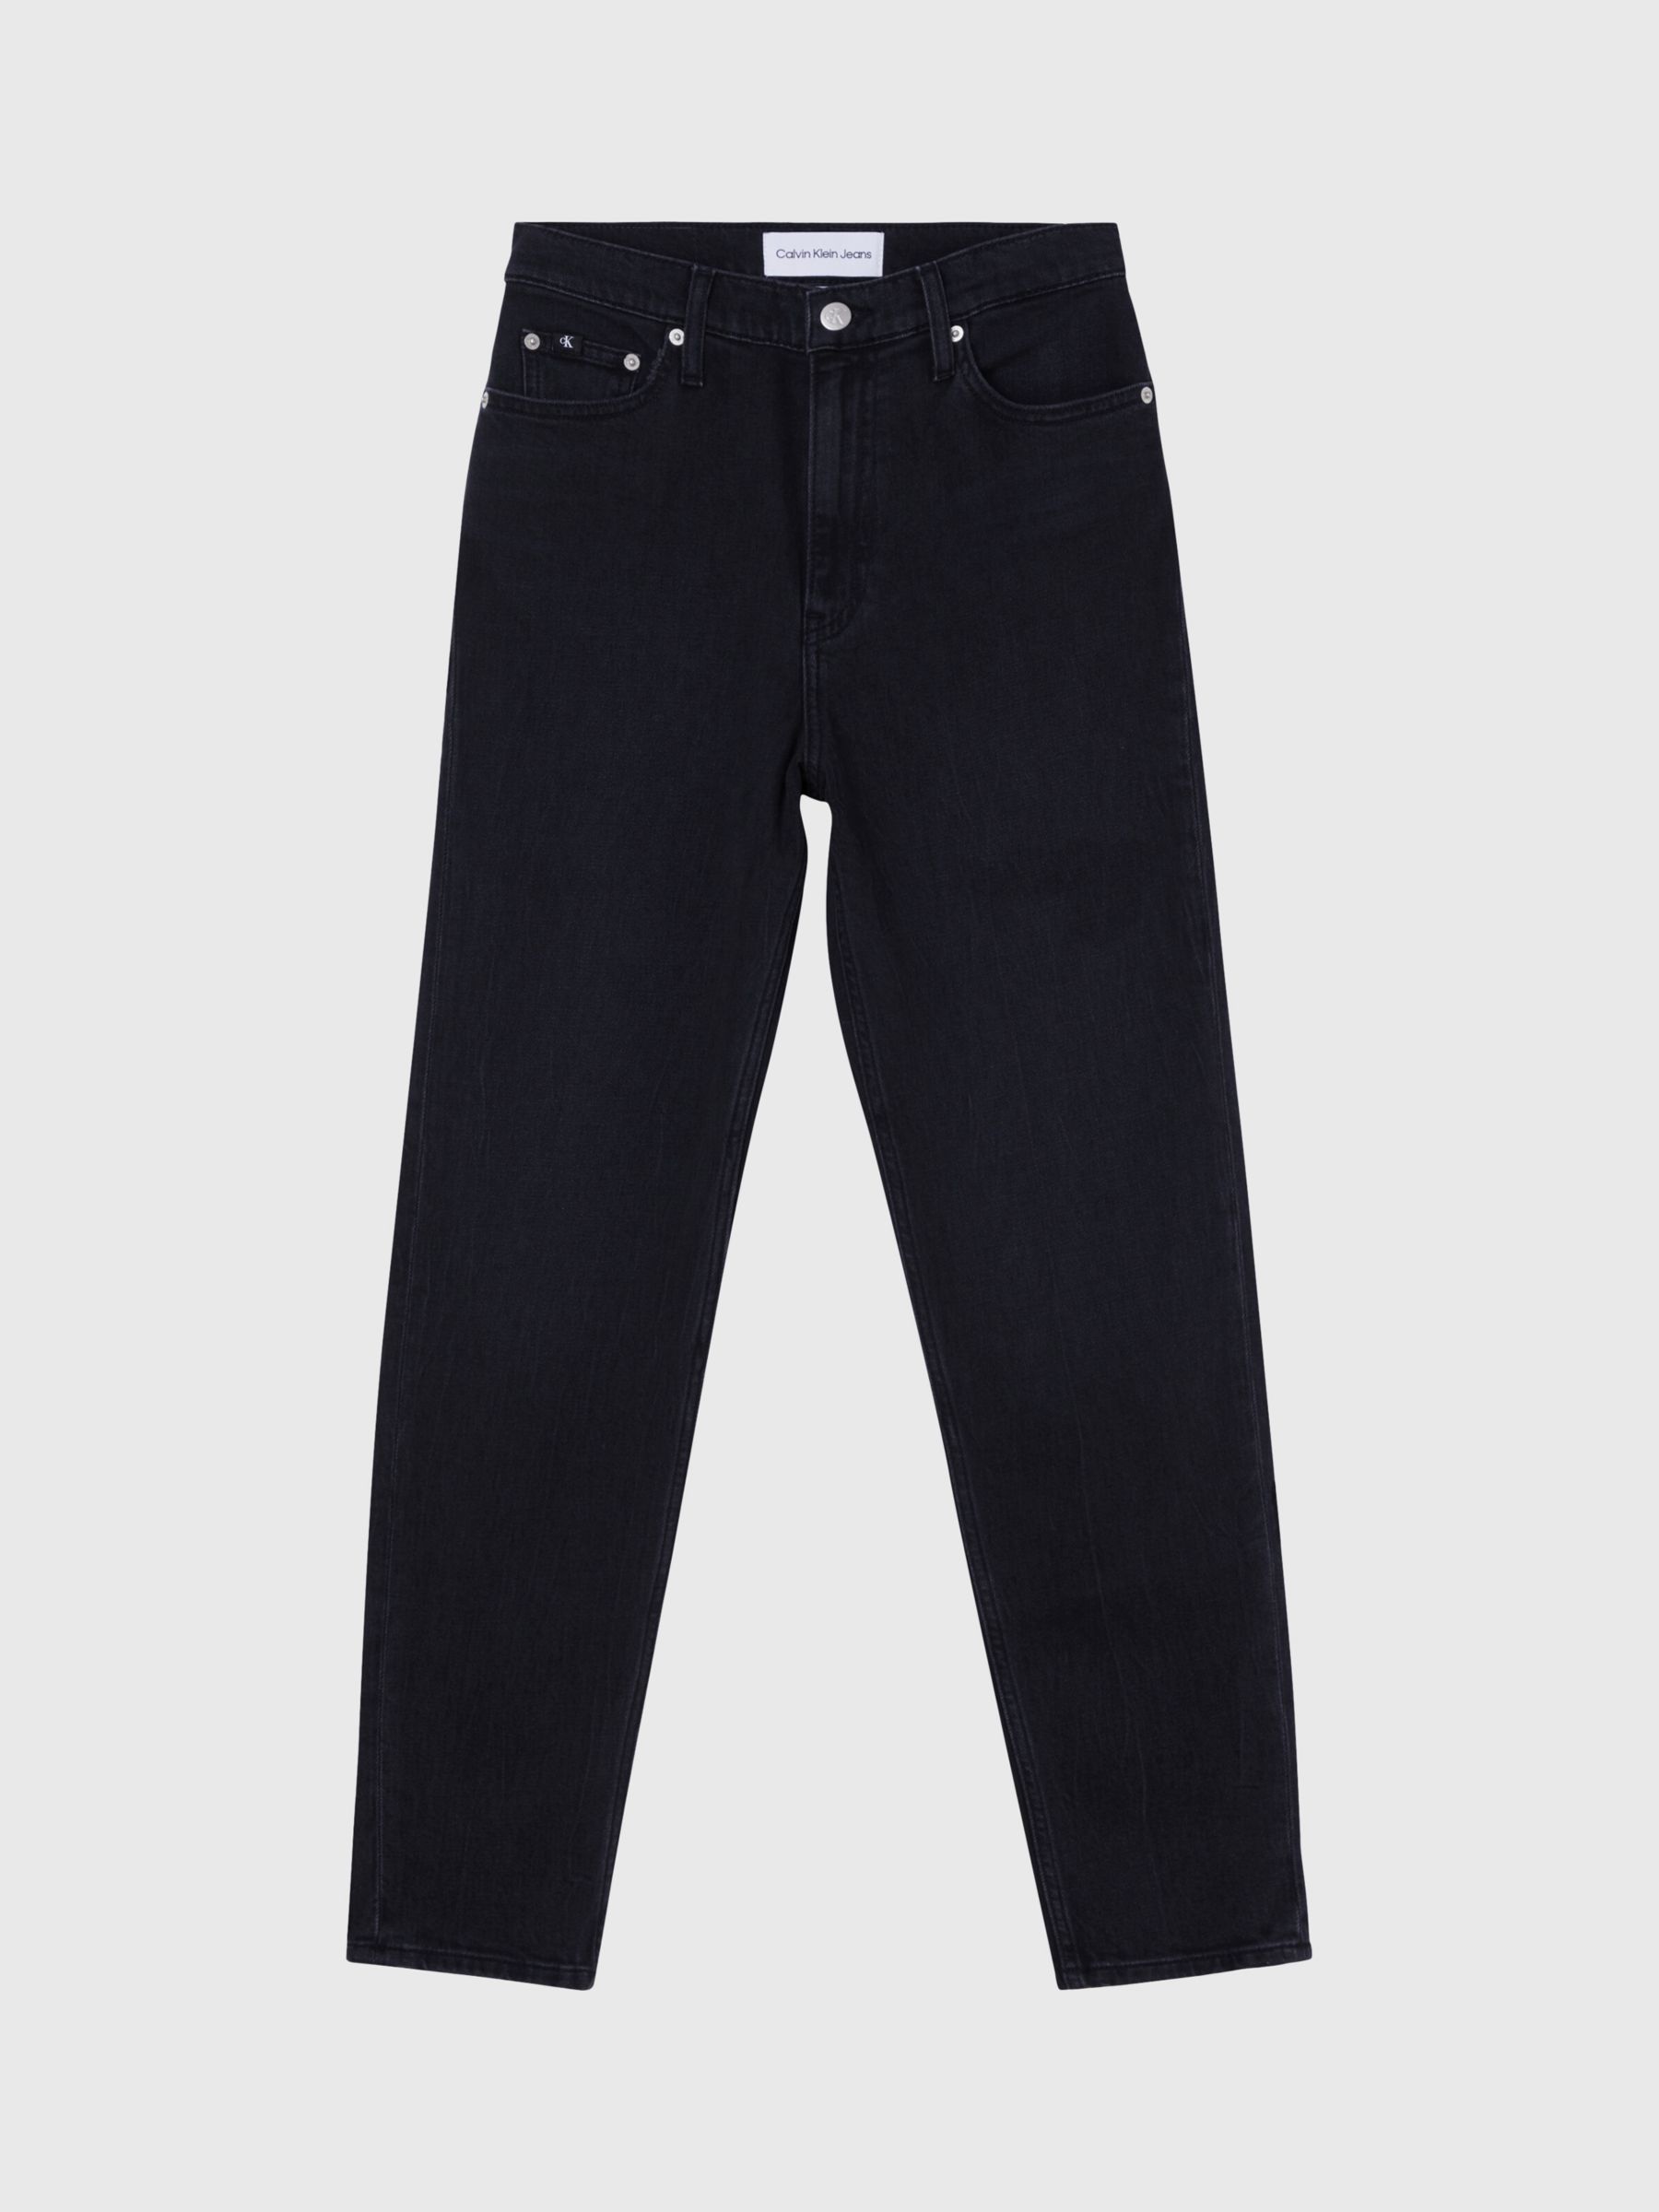 Calvin Klein Plain Mom Jeans, Denim Black at John Lewis & Partners